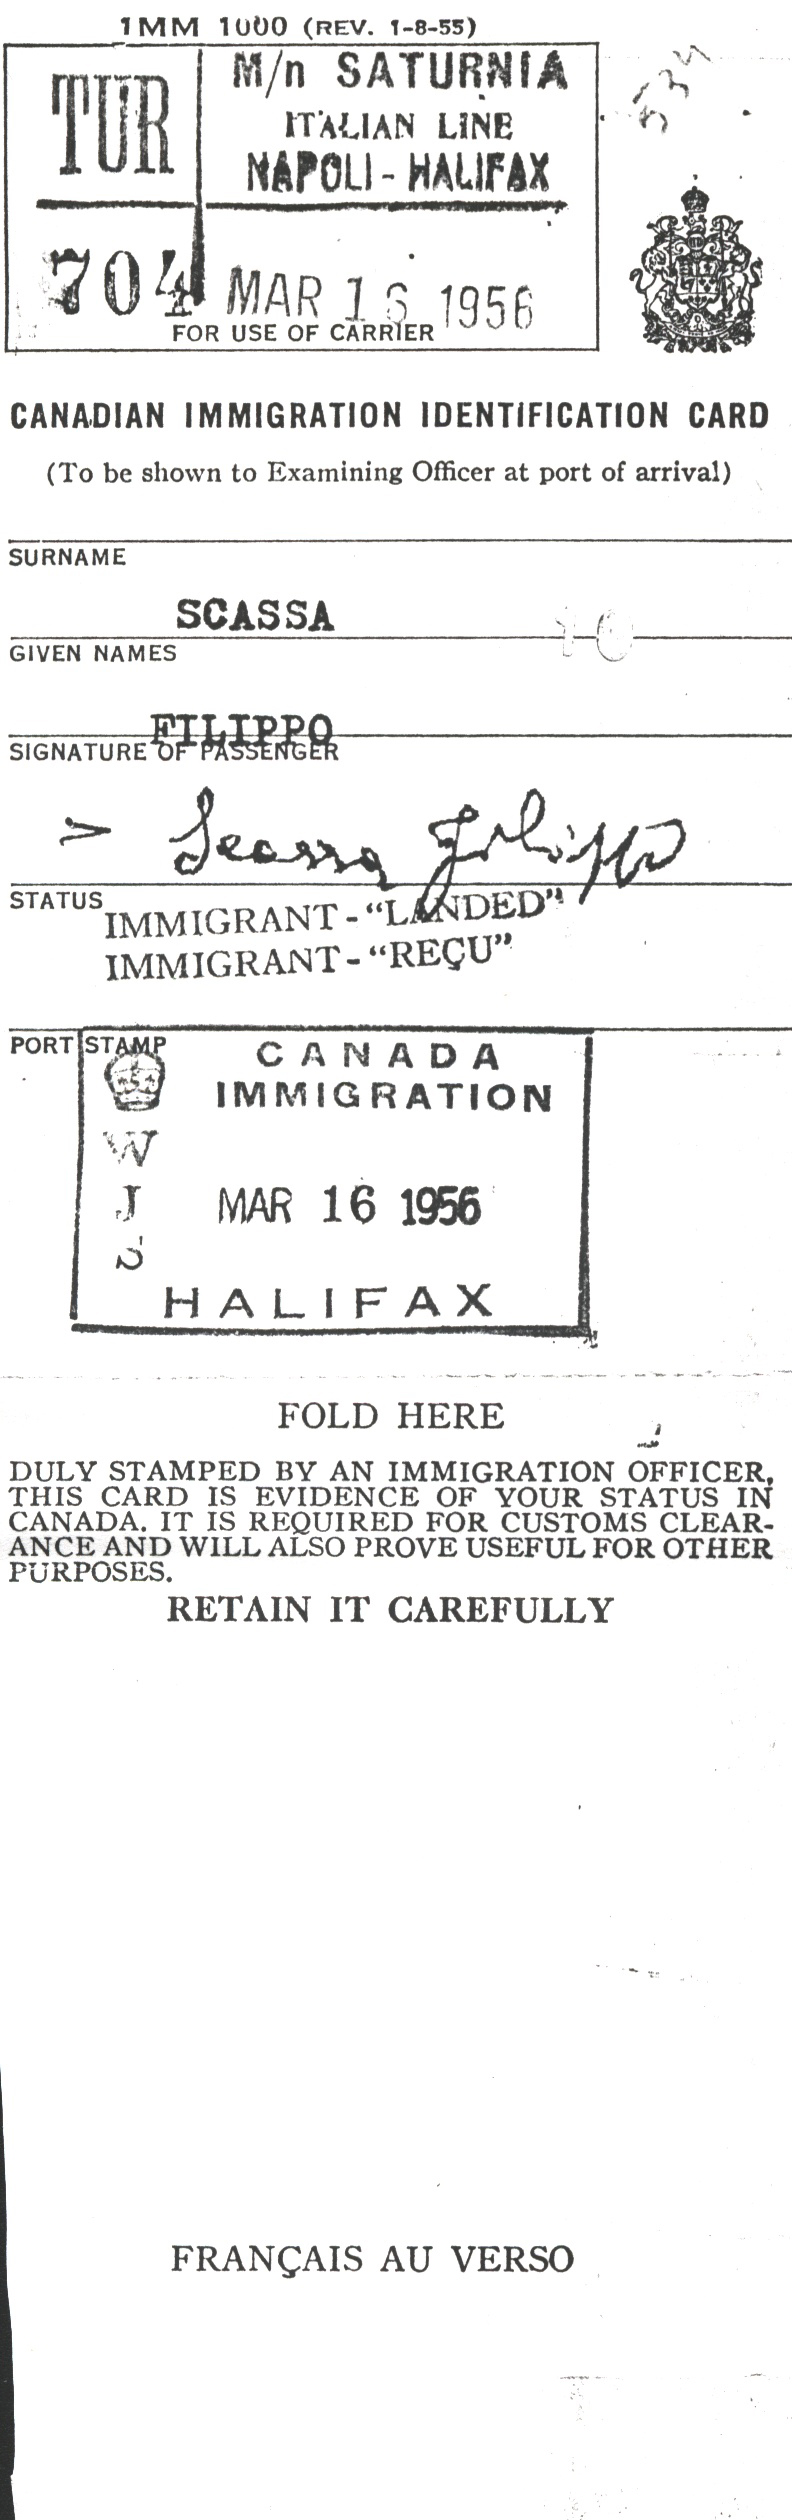 Canadian Immigration Identification Card of Filippo Scassa.